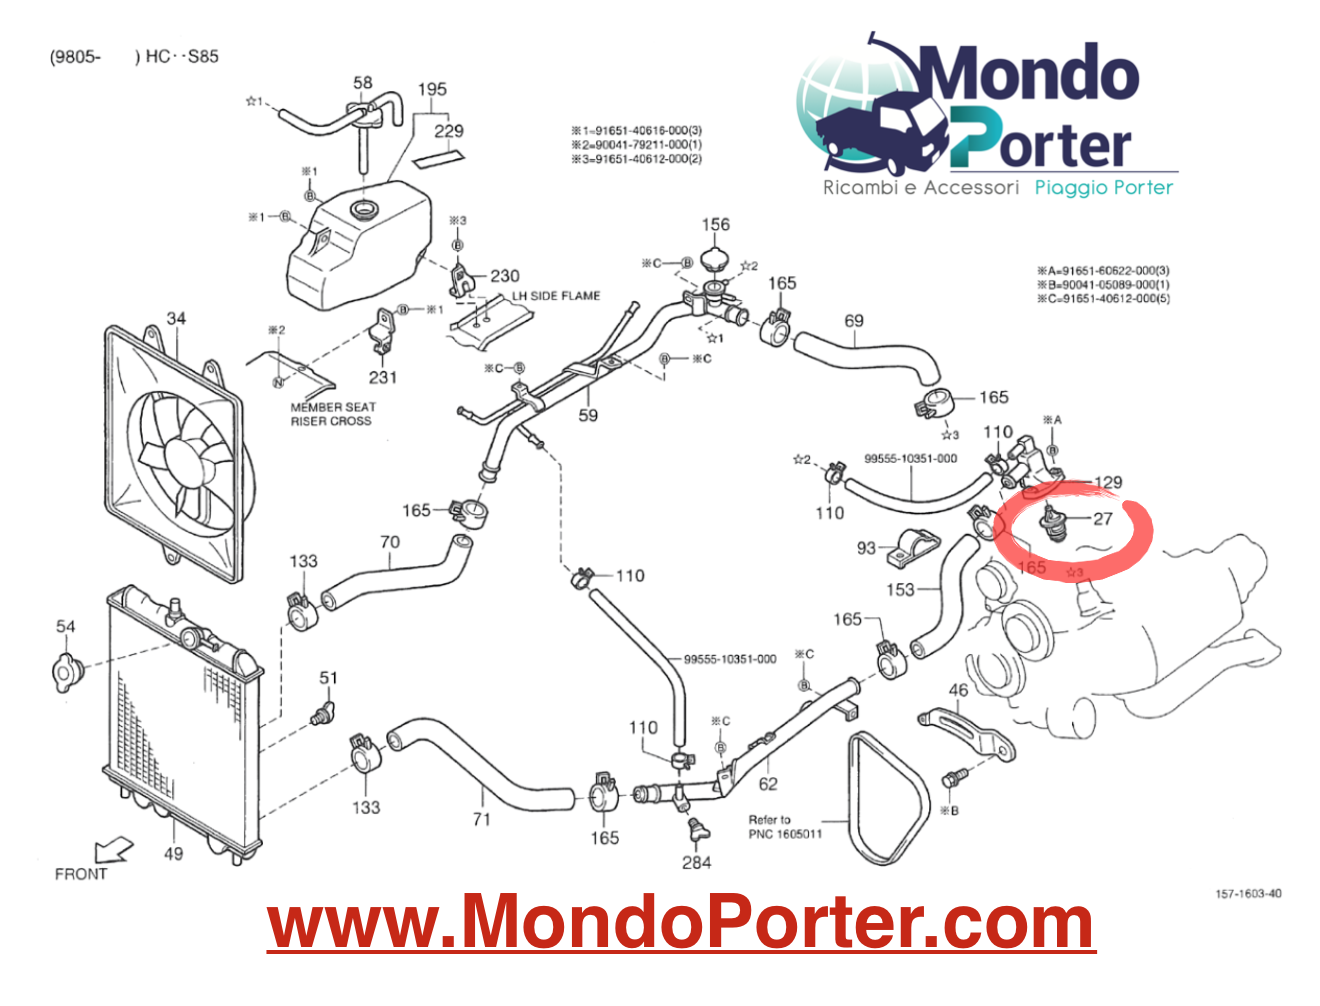 Termostato Piaggio Porter 1.3 Benzina 16v 9004833056000 - Mondo Porter